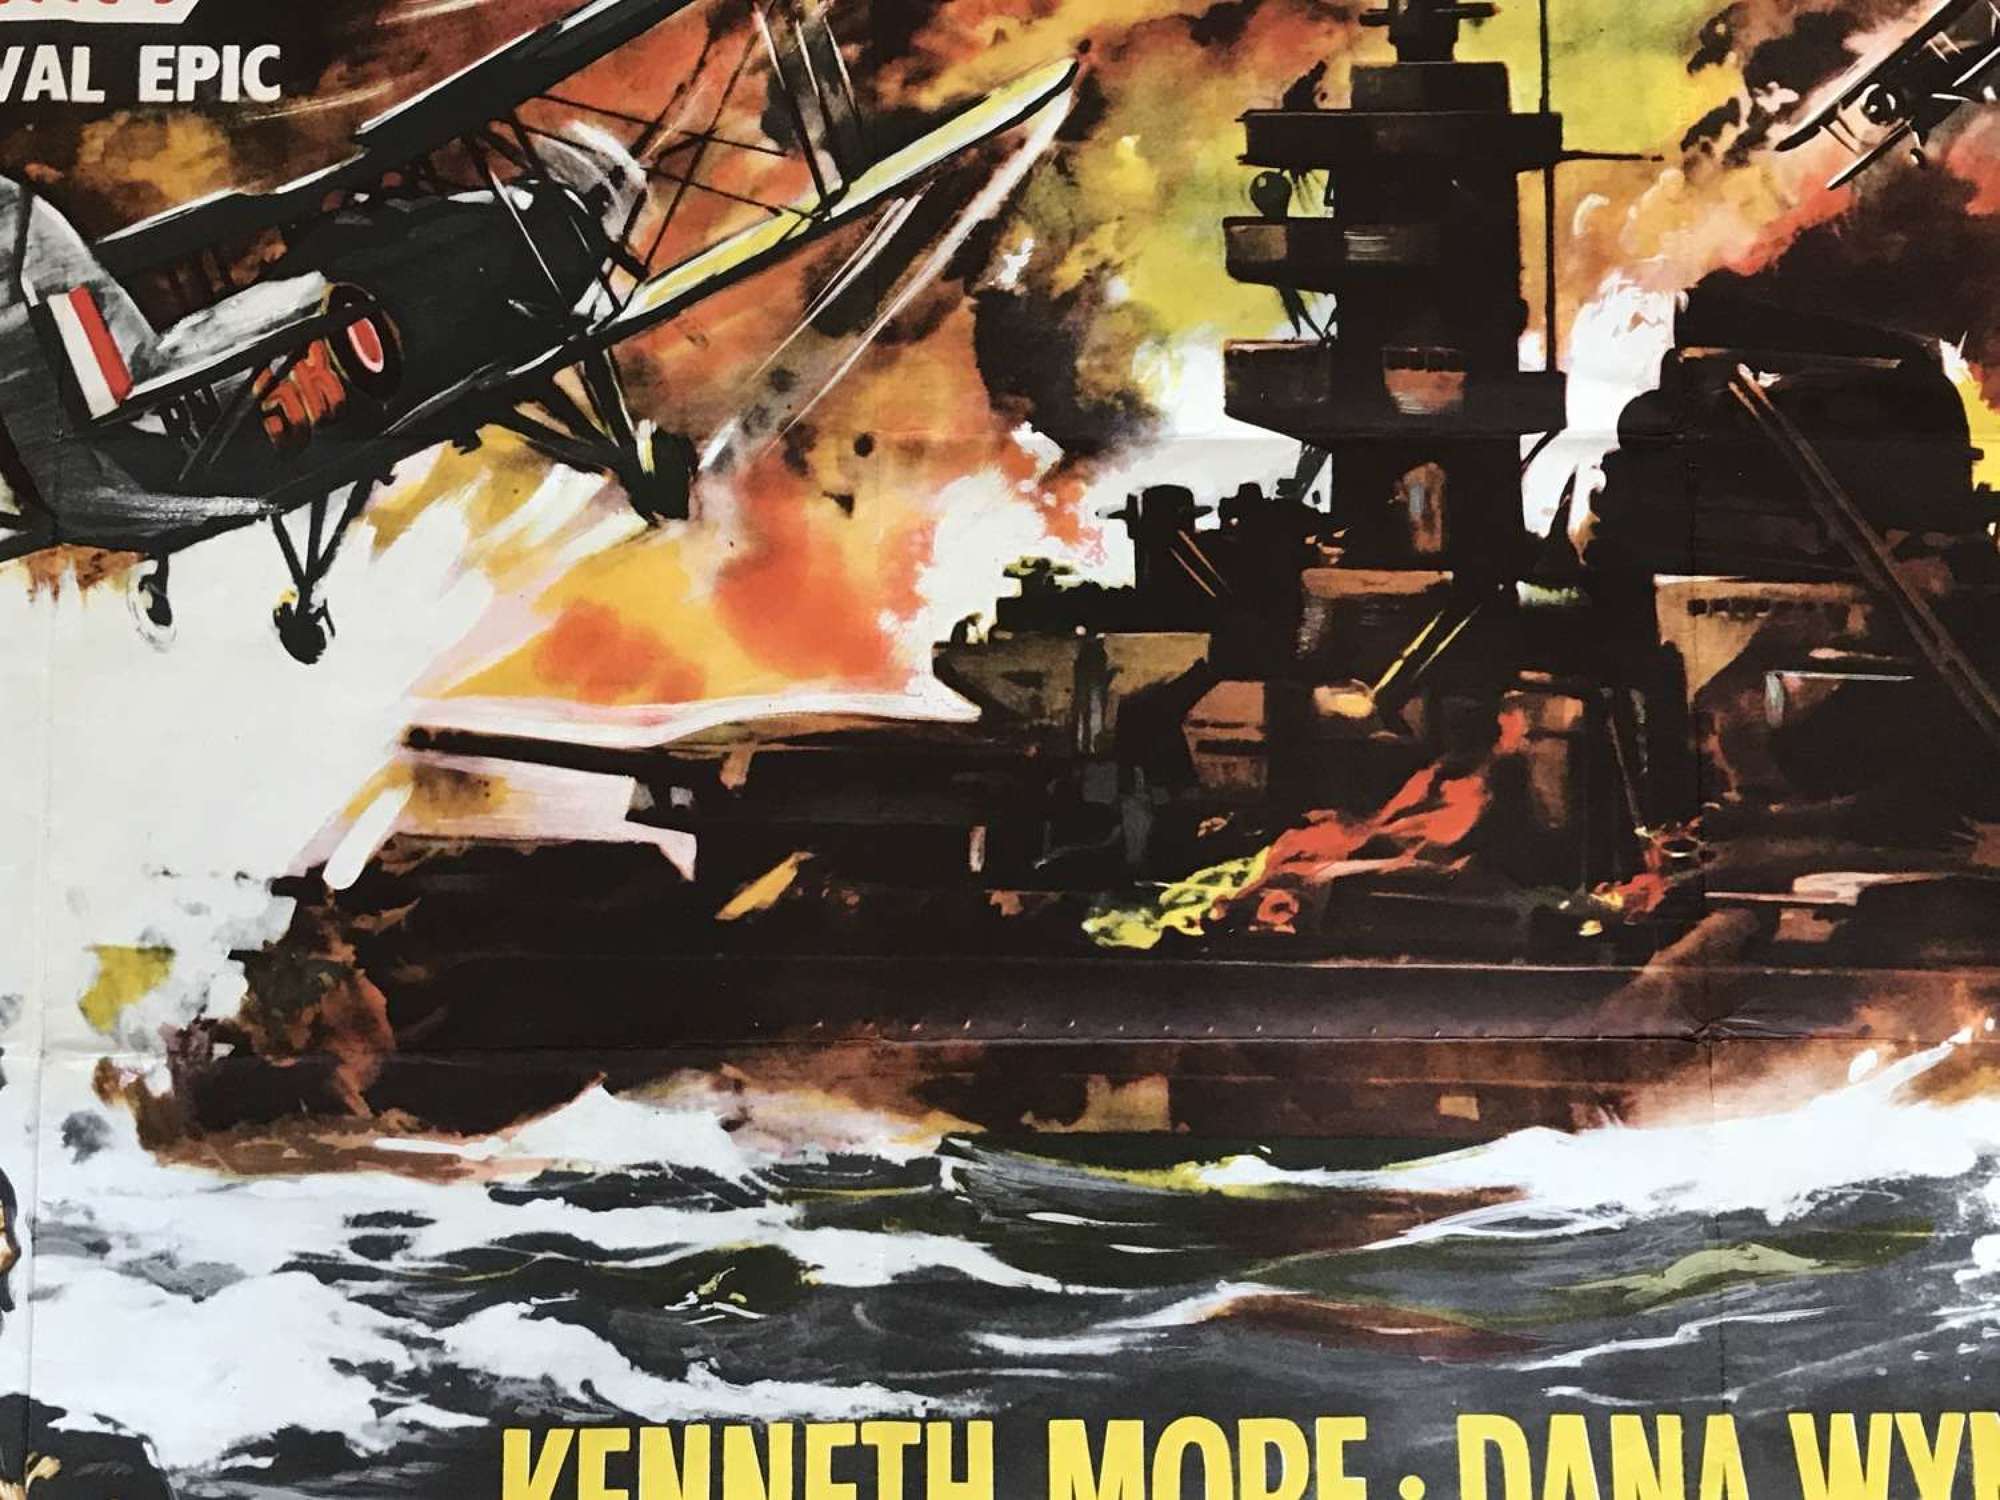 Sink the Bismarck film poster